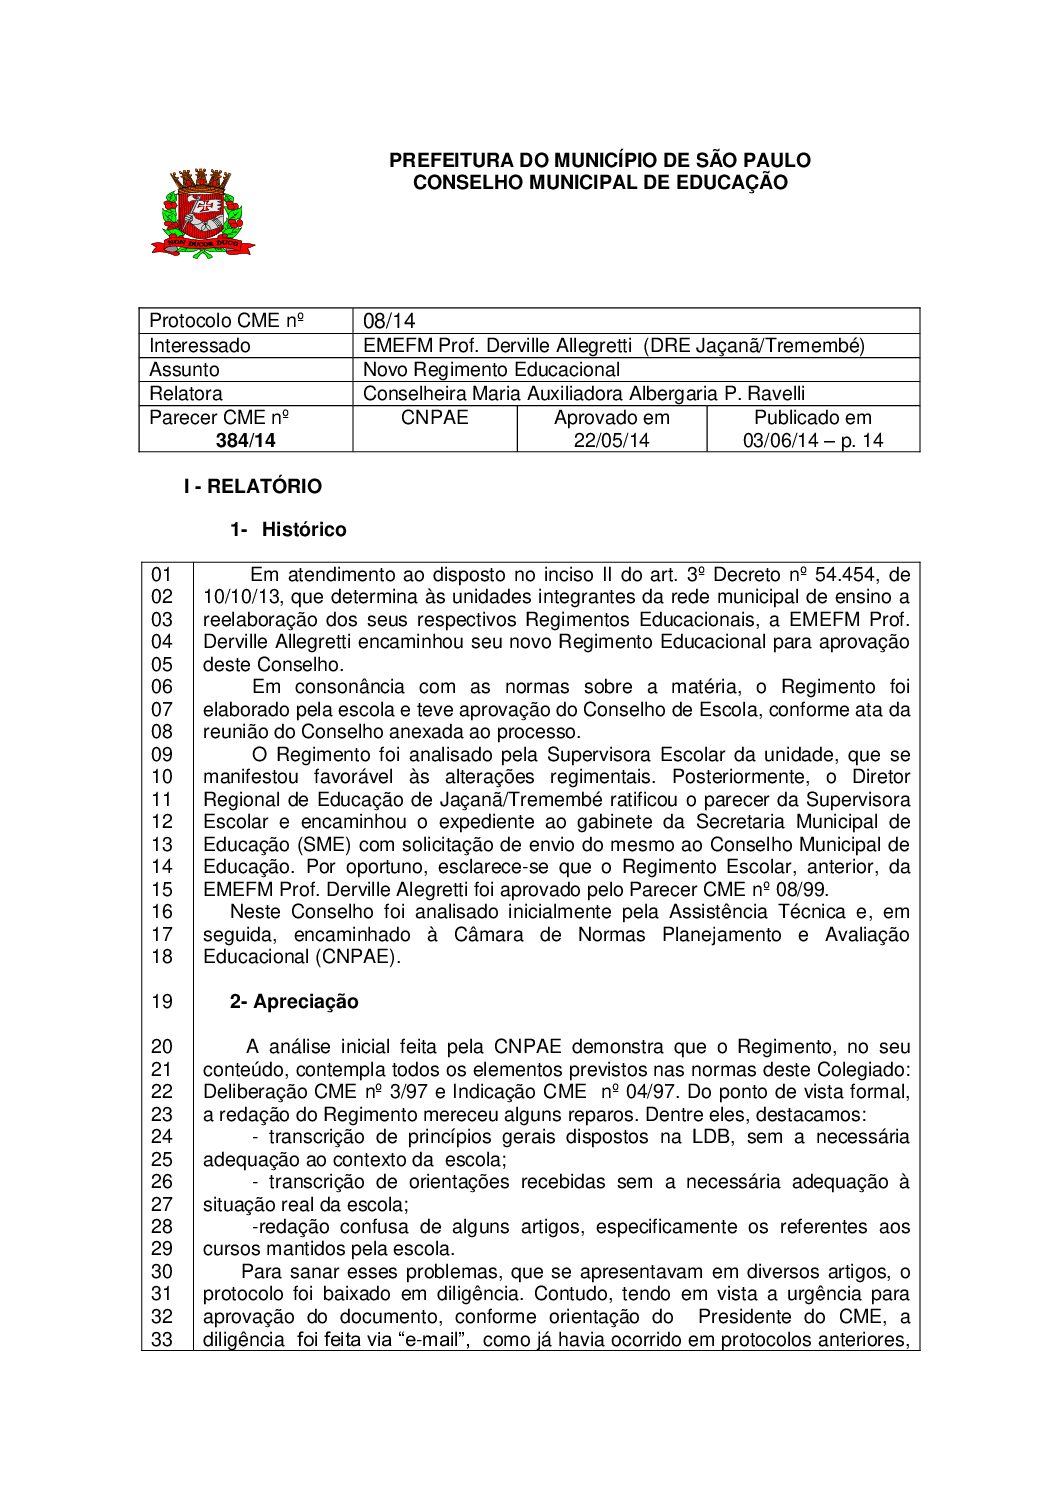 Parecer CME nº 384/2014 - EMEFM Prof. Derville Allegretti  (DRE Jaçanã/Tremembé) - Novo Regimento Educacional